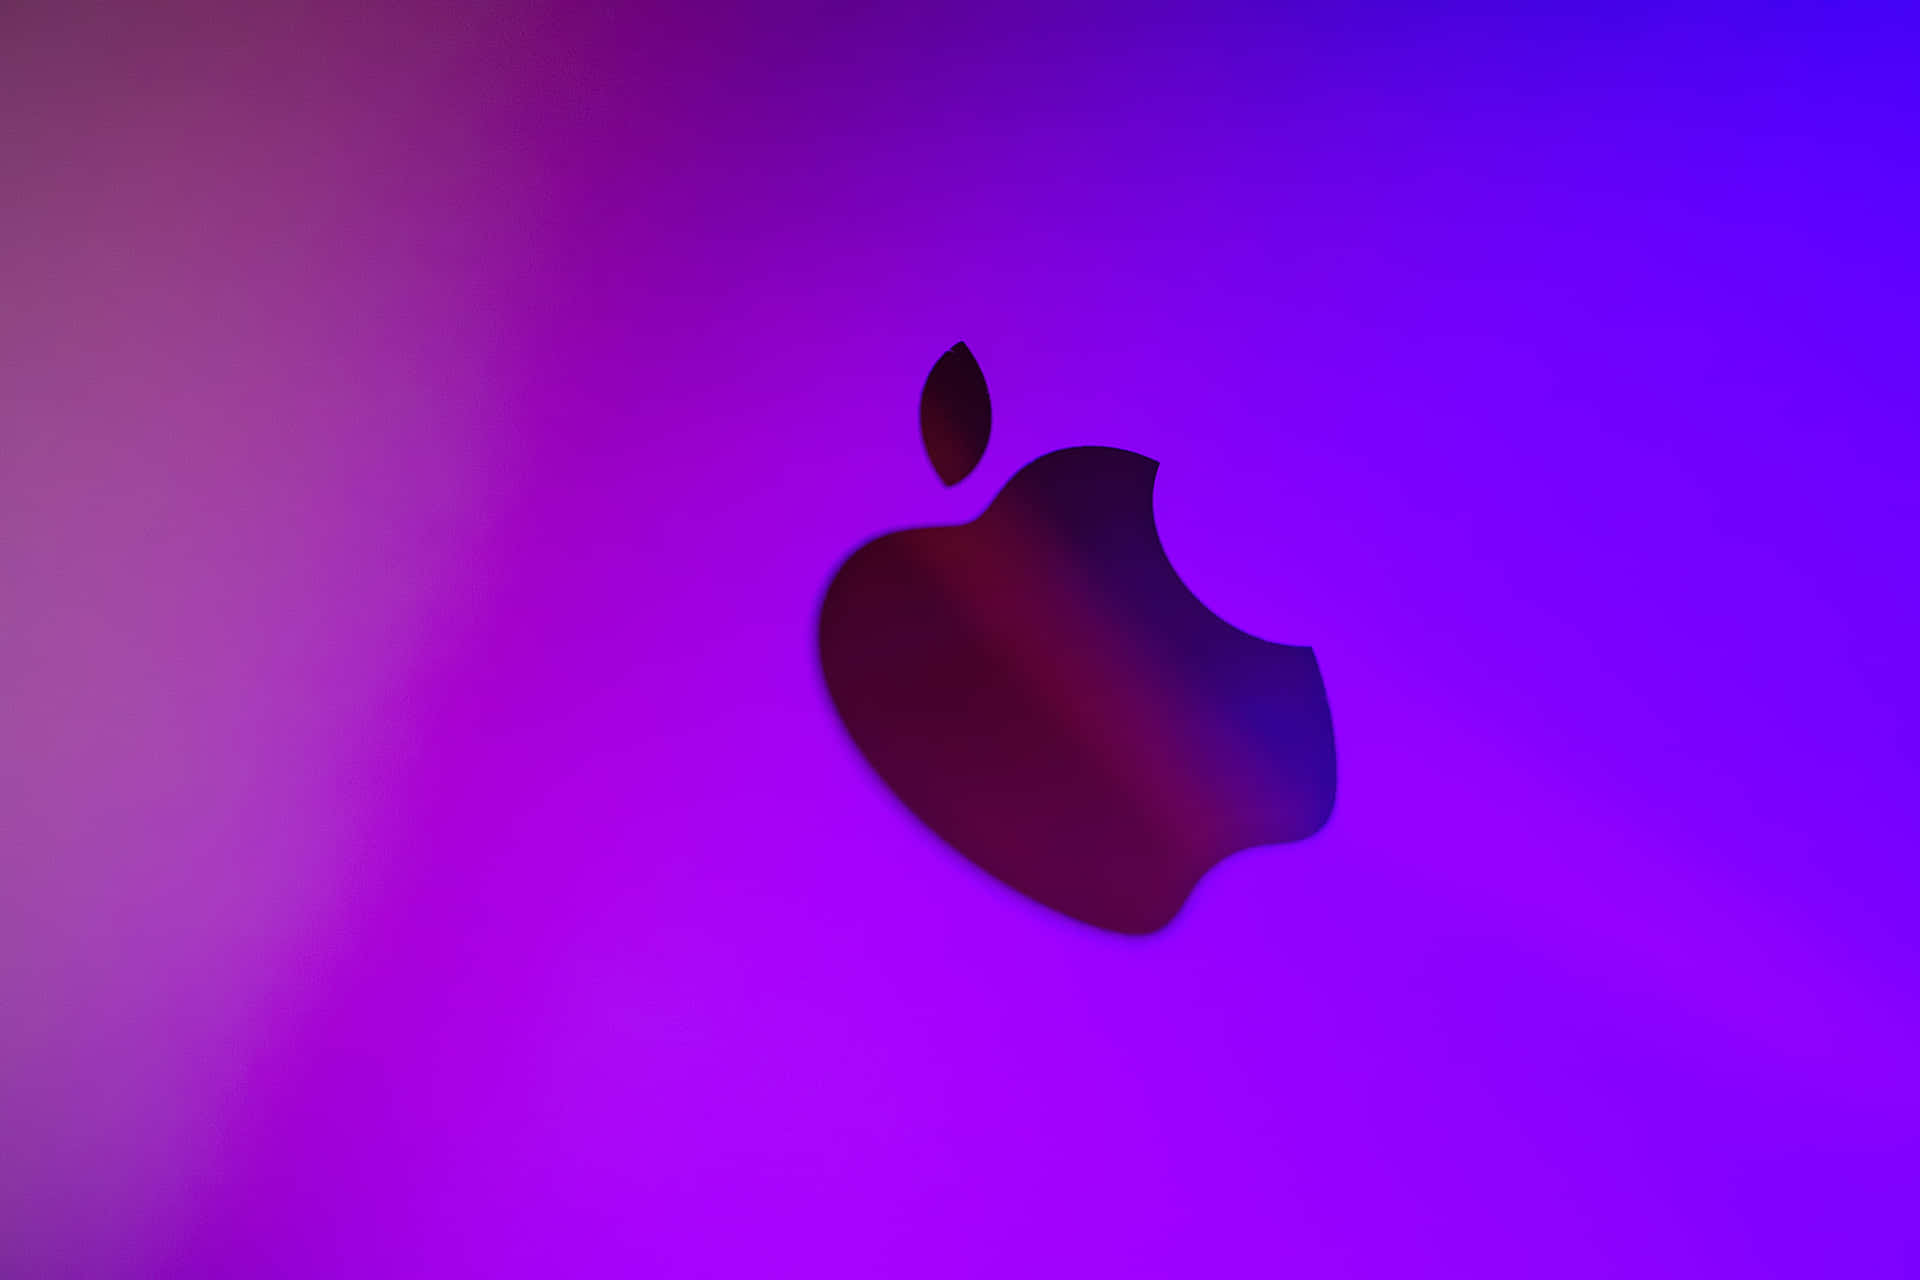 Sleek Apple Logo on a Stunning Background